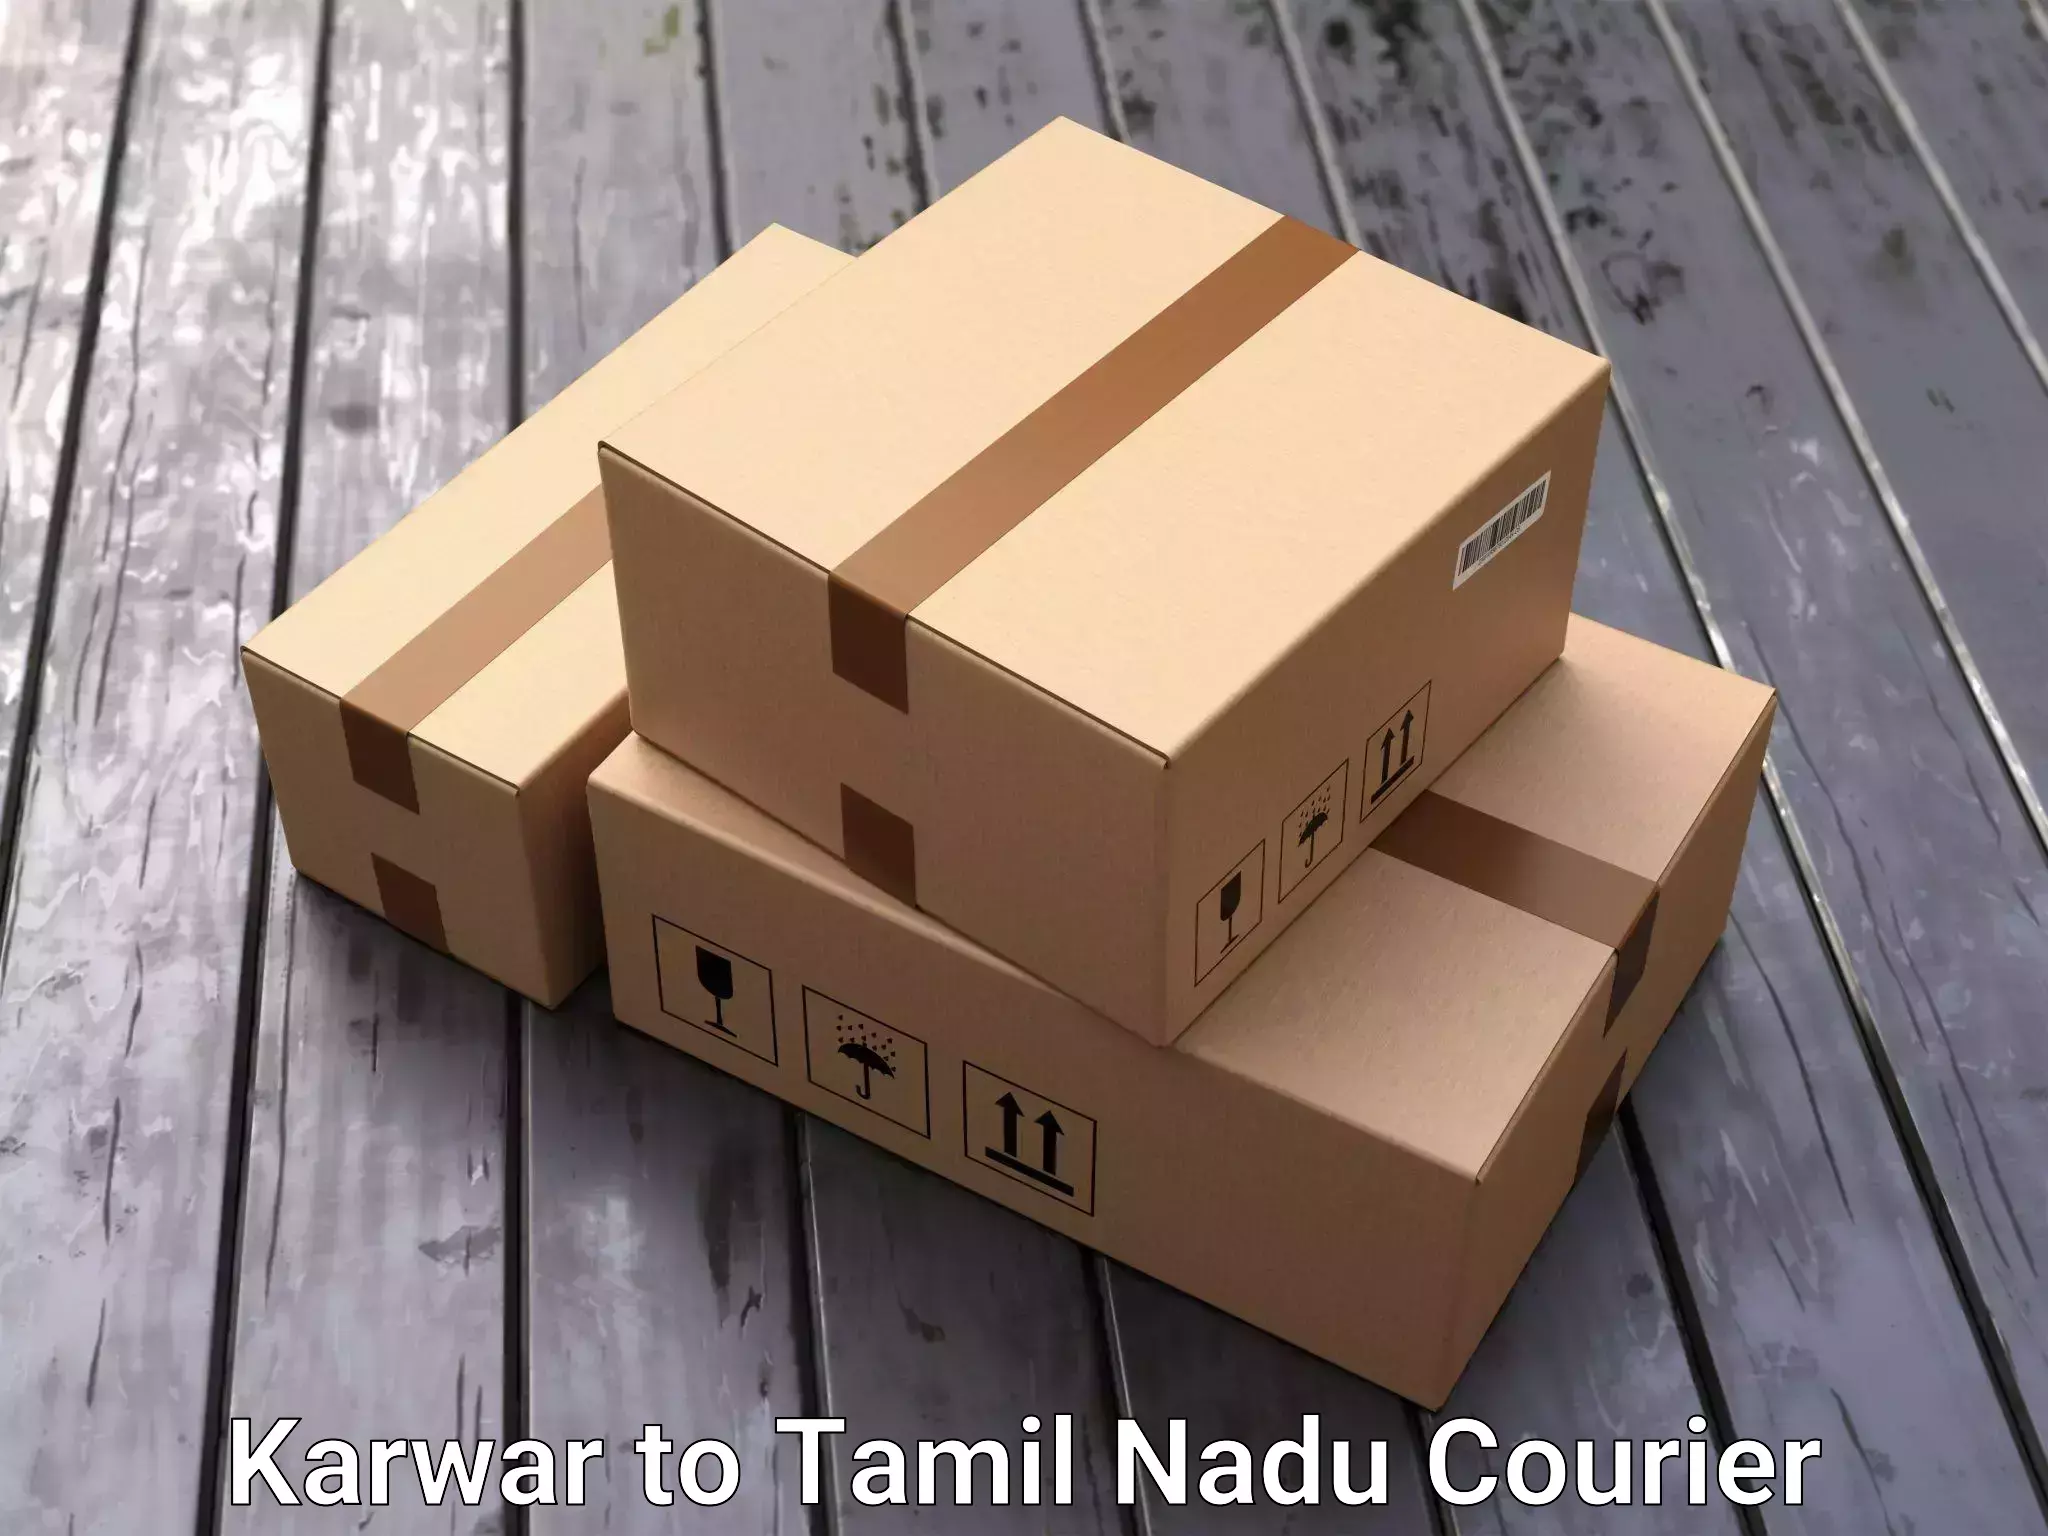 Professional moving assistance Karwar to Chennai